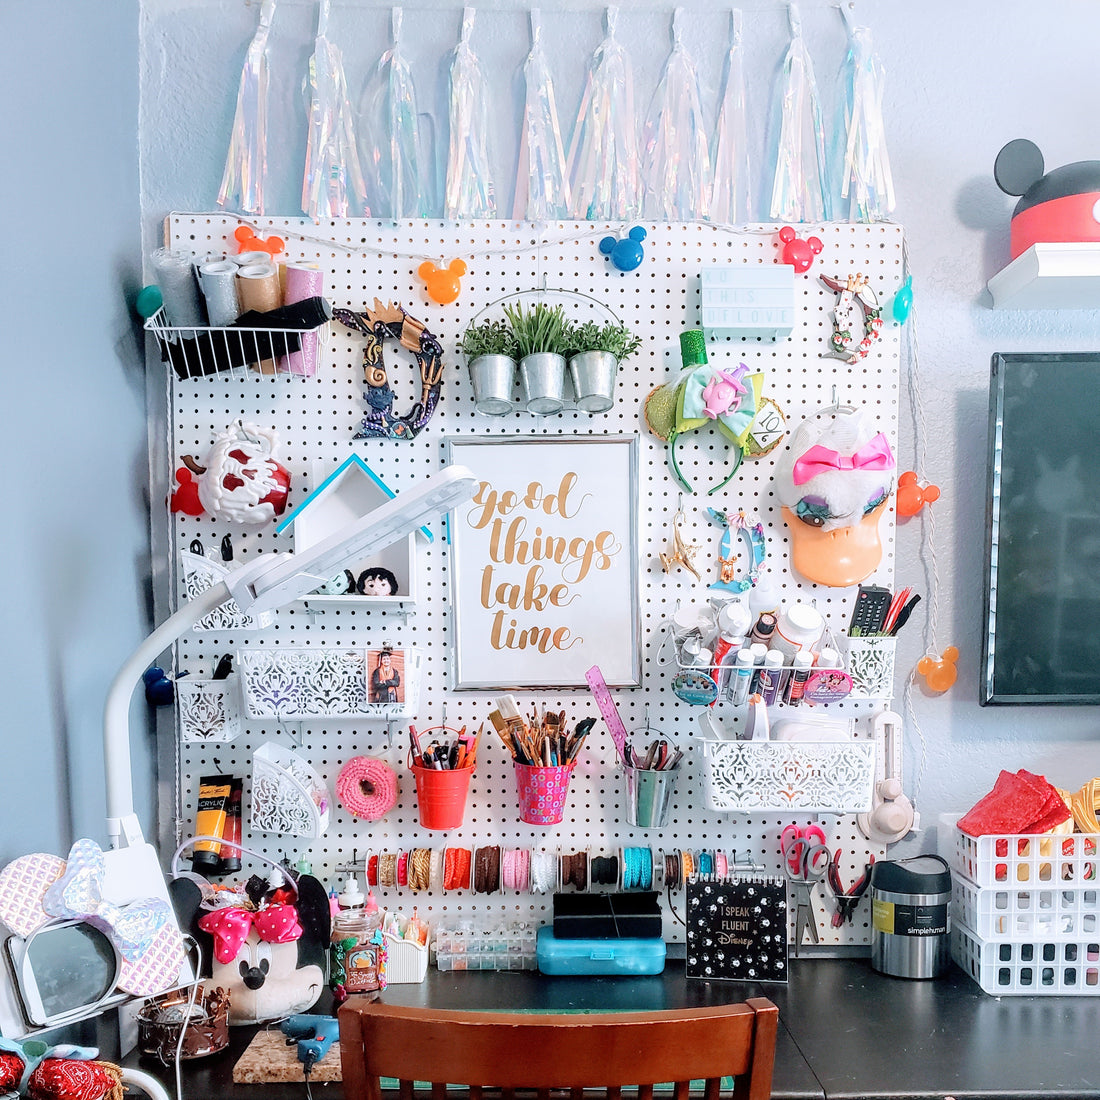 My Pinterest Inspired Craft Room – ThisDFLove